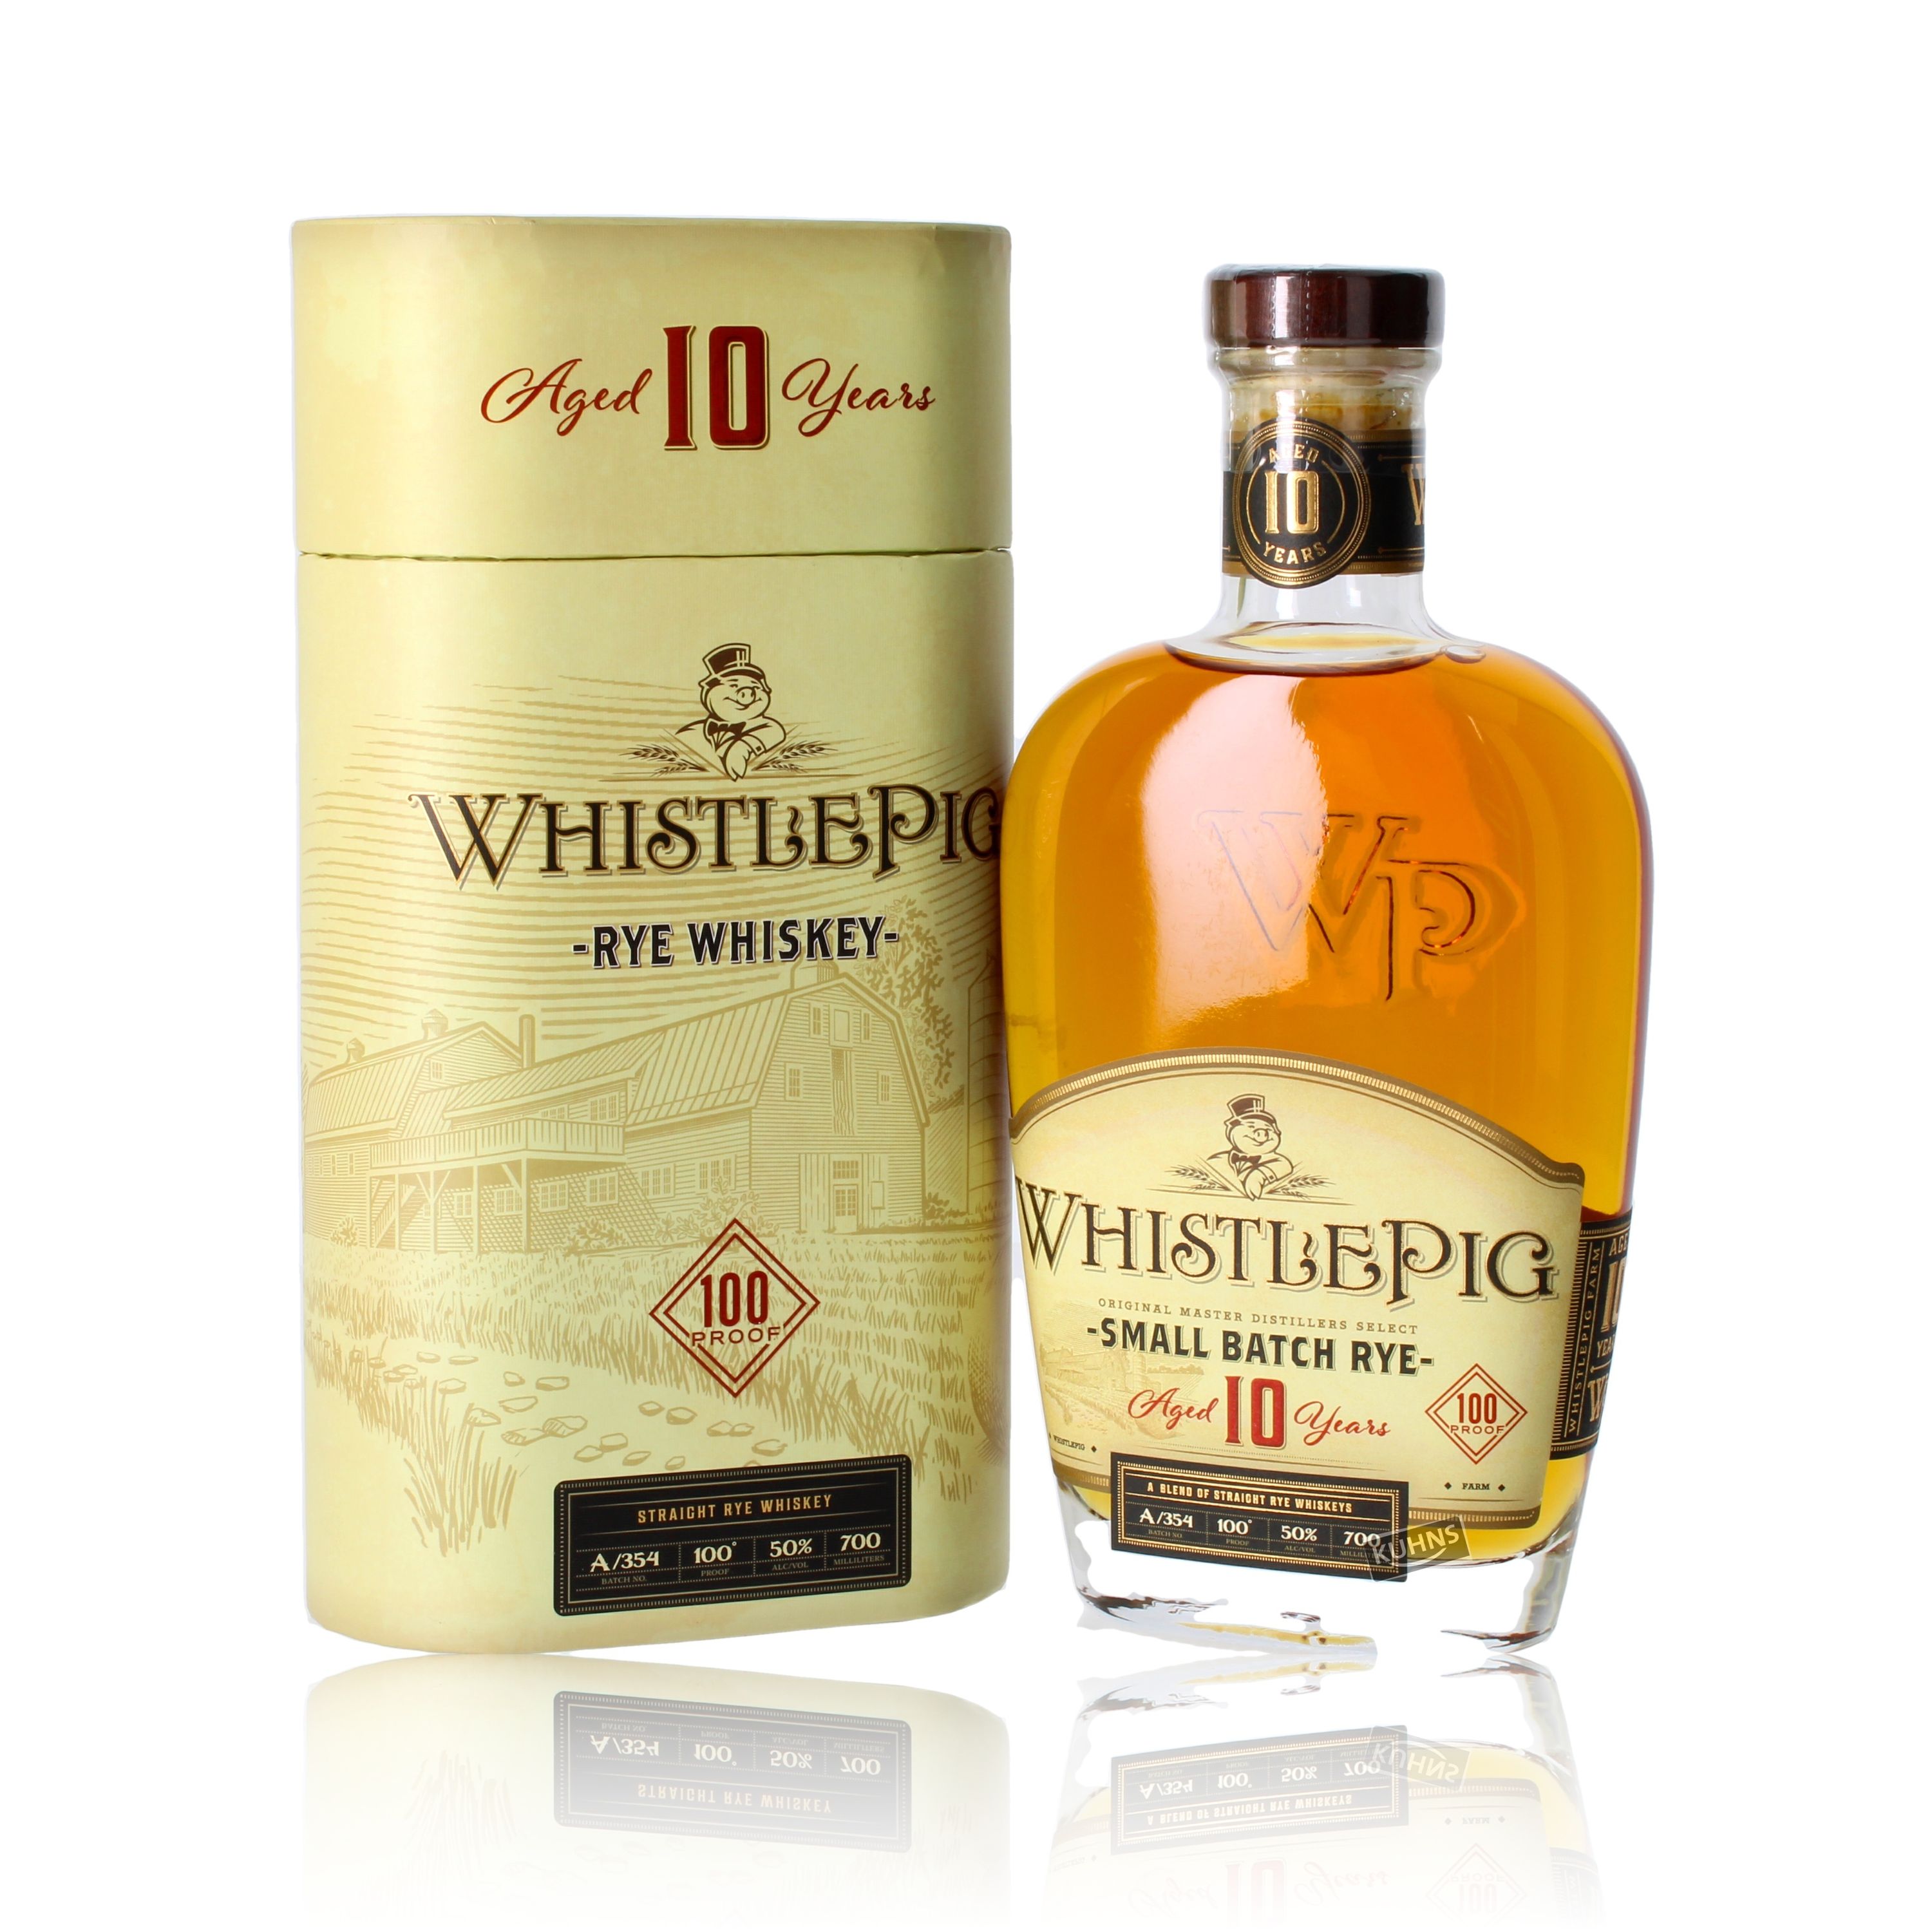 Whistlepig 10 Jahre Rye Whiskey, 0,7l, alc. 50 Vol.-%